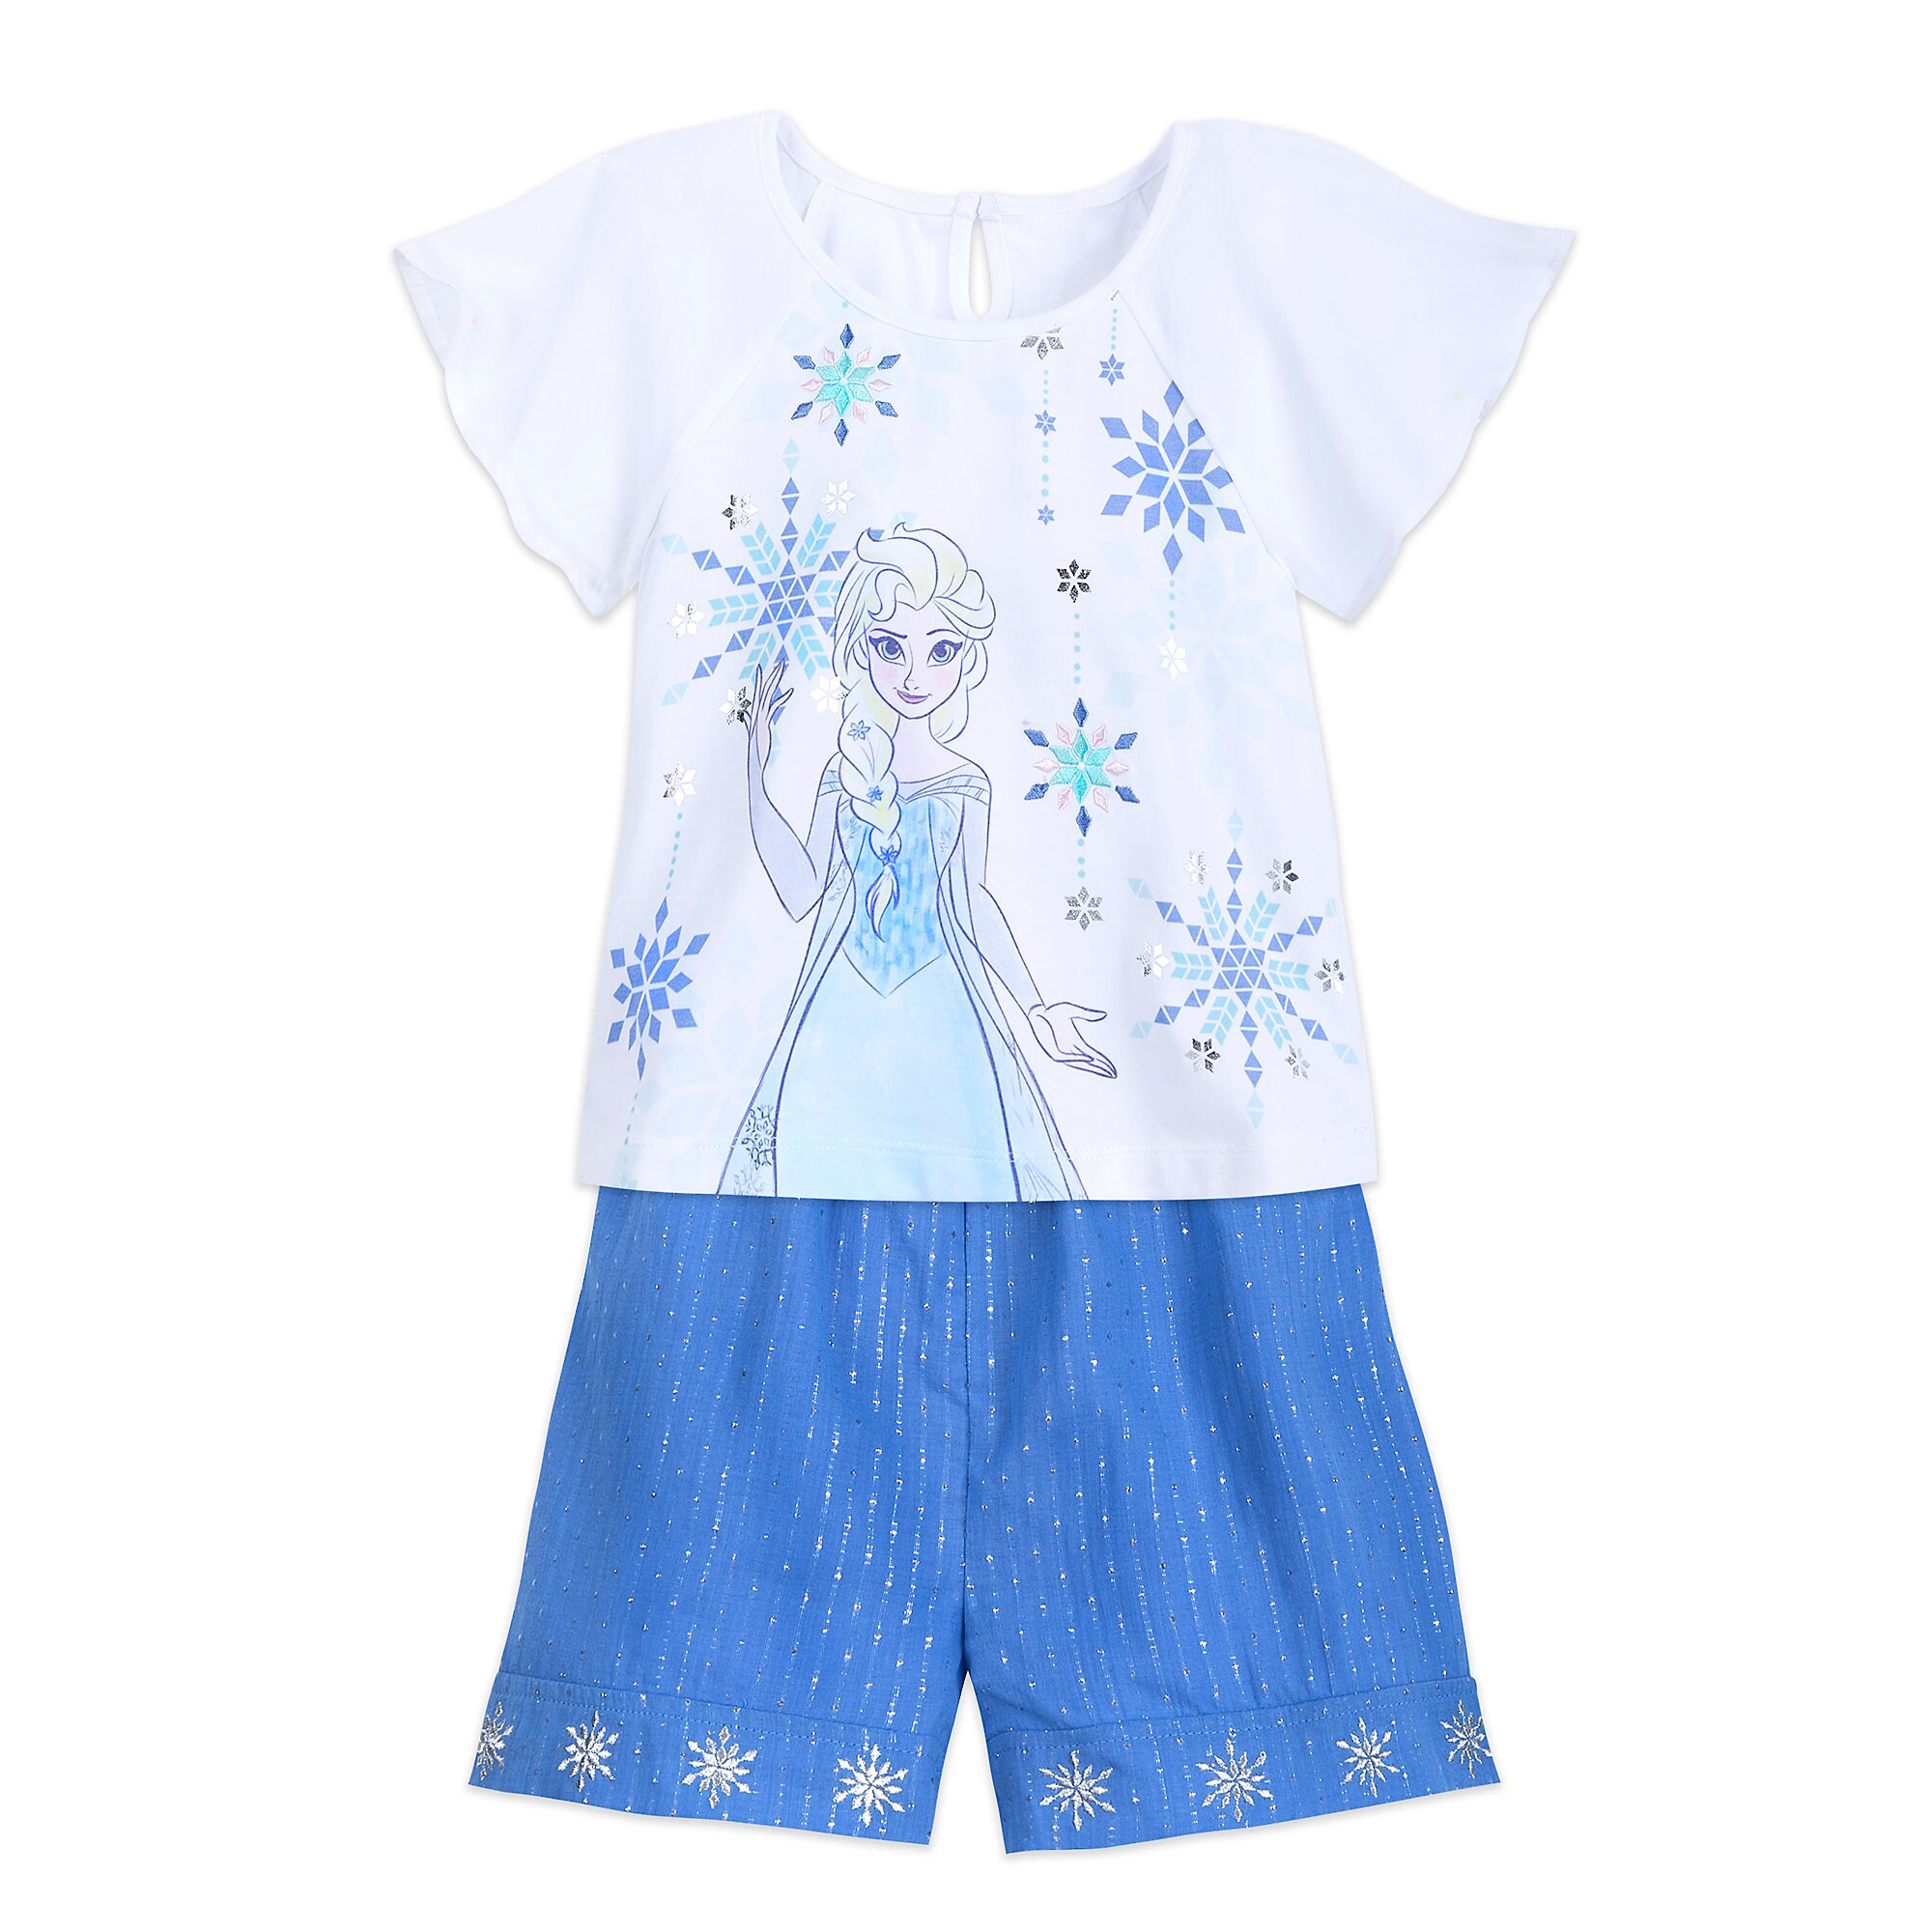 Elsa Shirt and Shorts Set for Girls